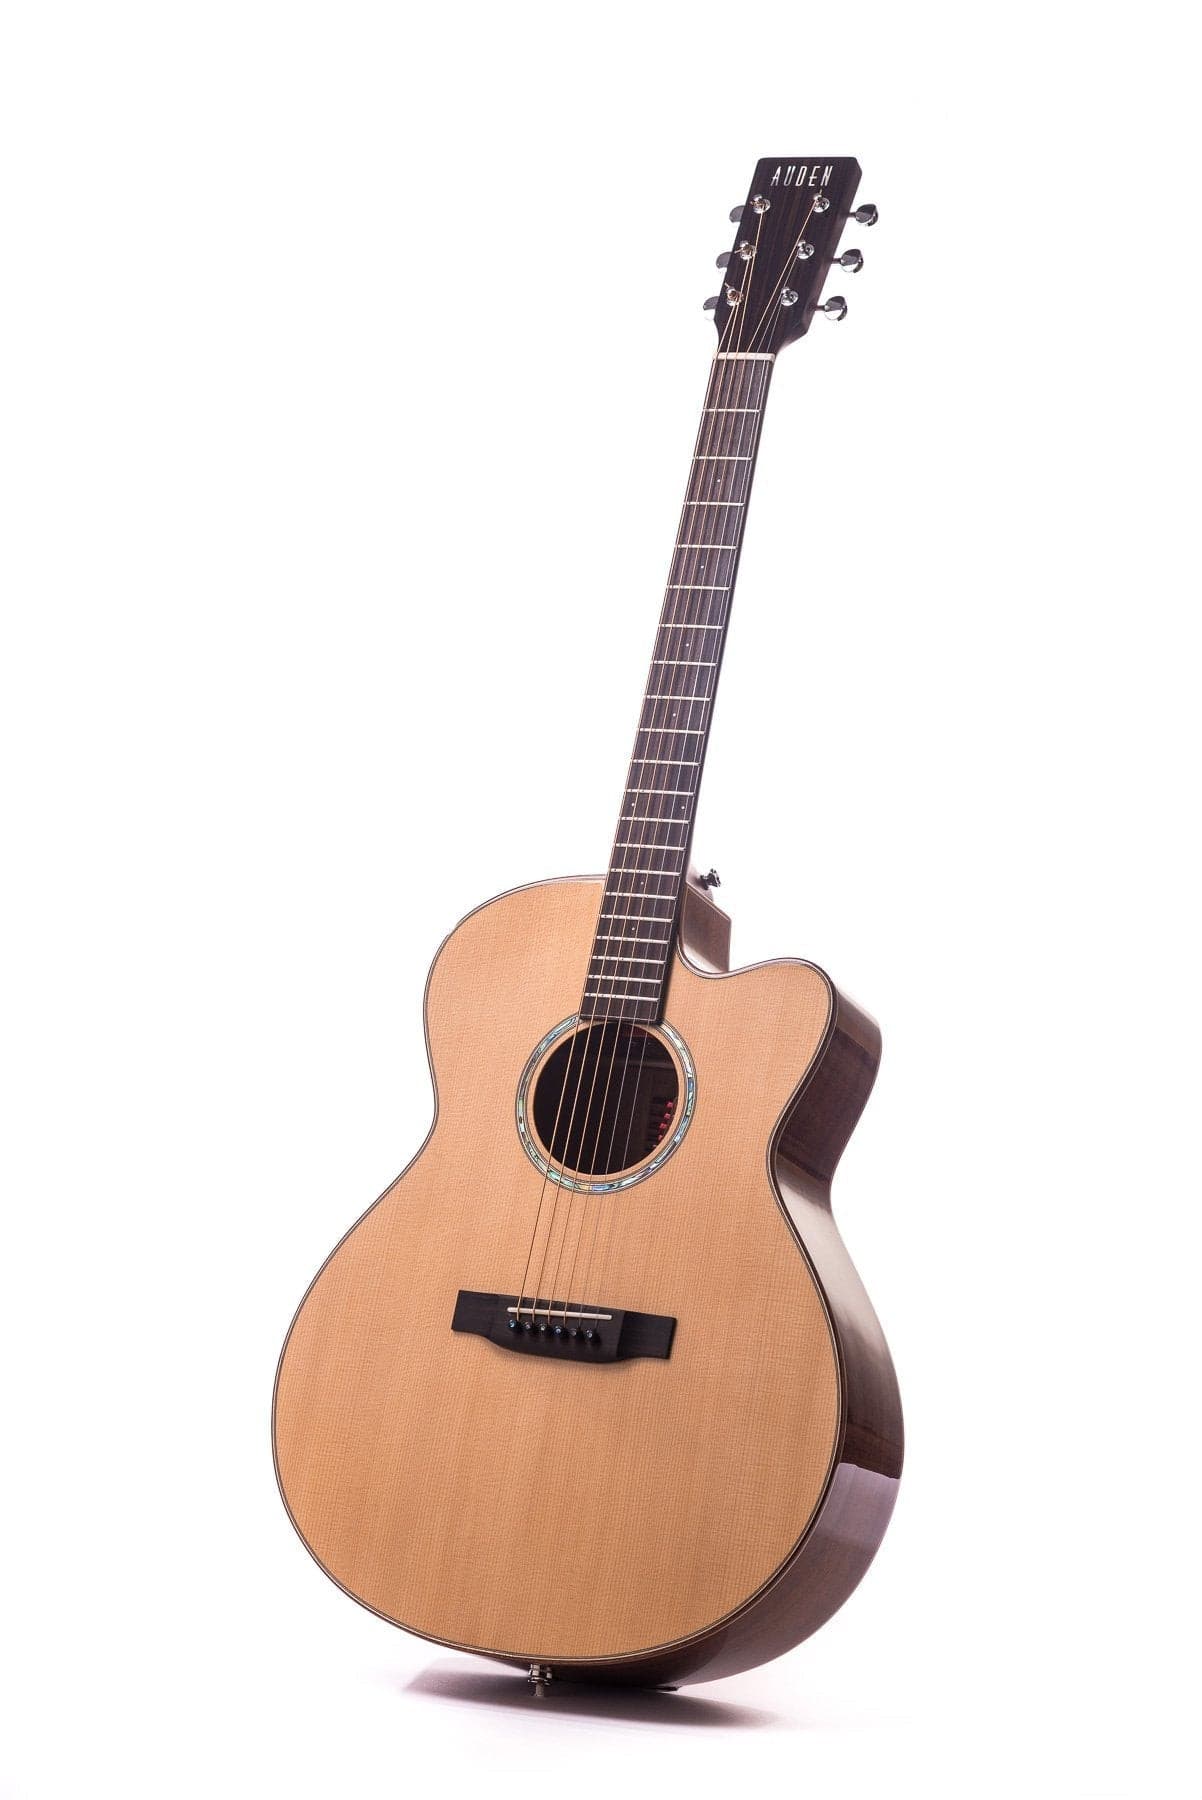 Auden Austin Mahogany Cutaway, Electro Acoustic Guitar for sale at Richards Guitars.